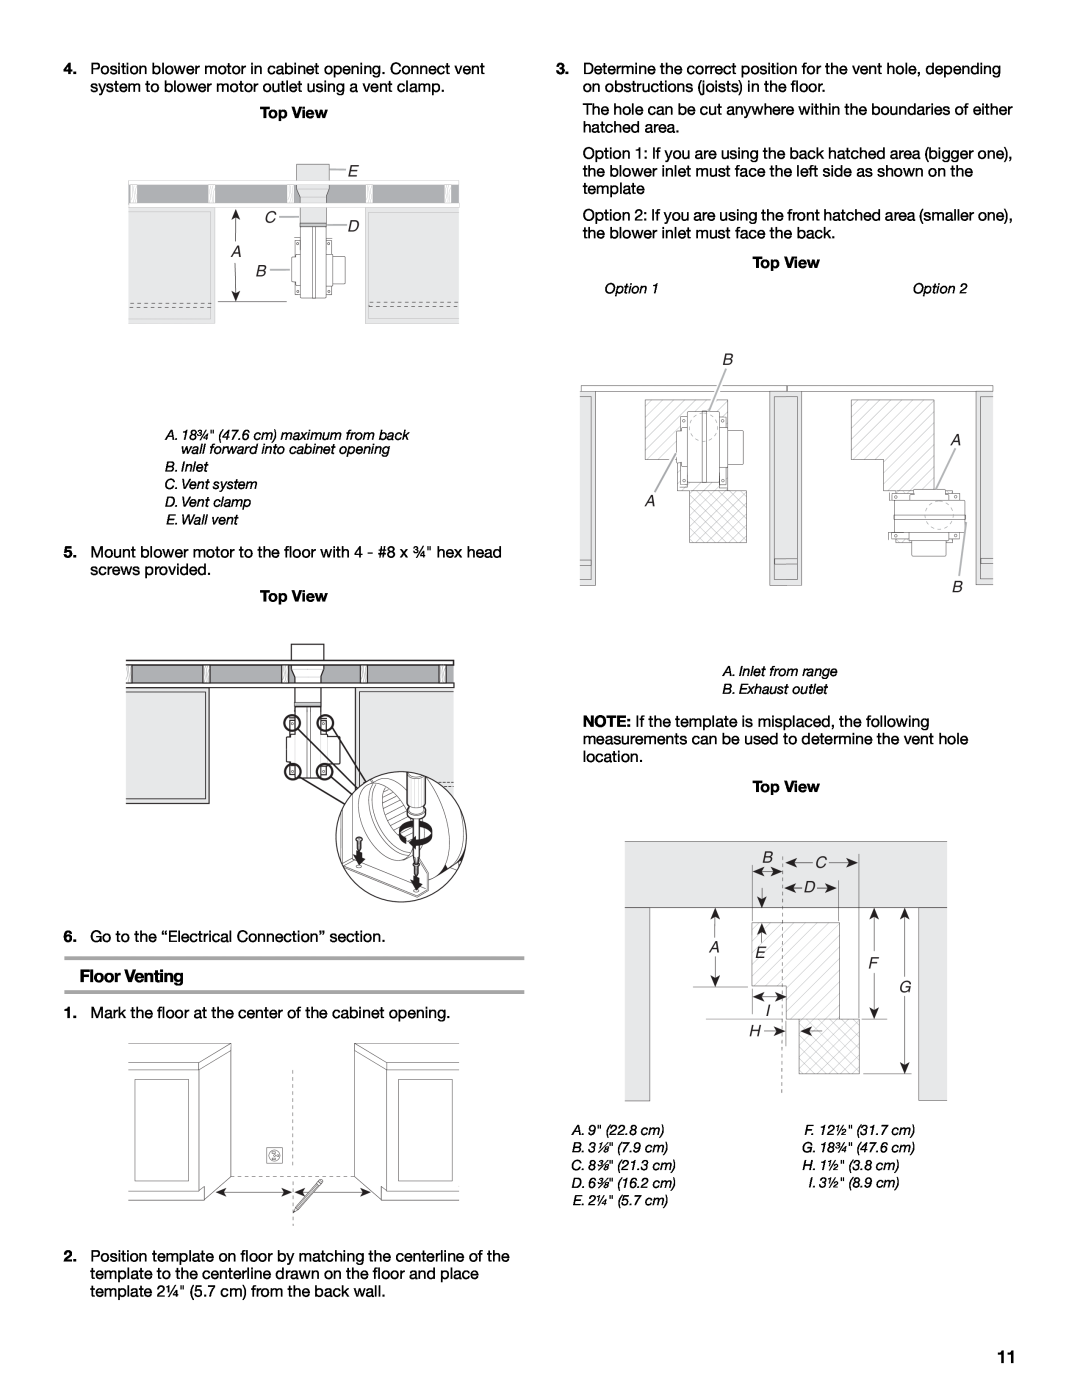 Jenn-Air W10430955A installation instructions B A A B, Floor Venting, Top View 